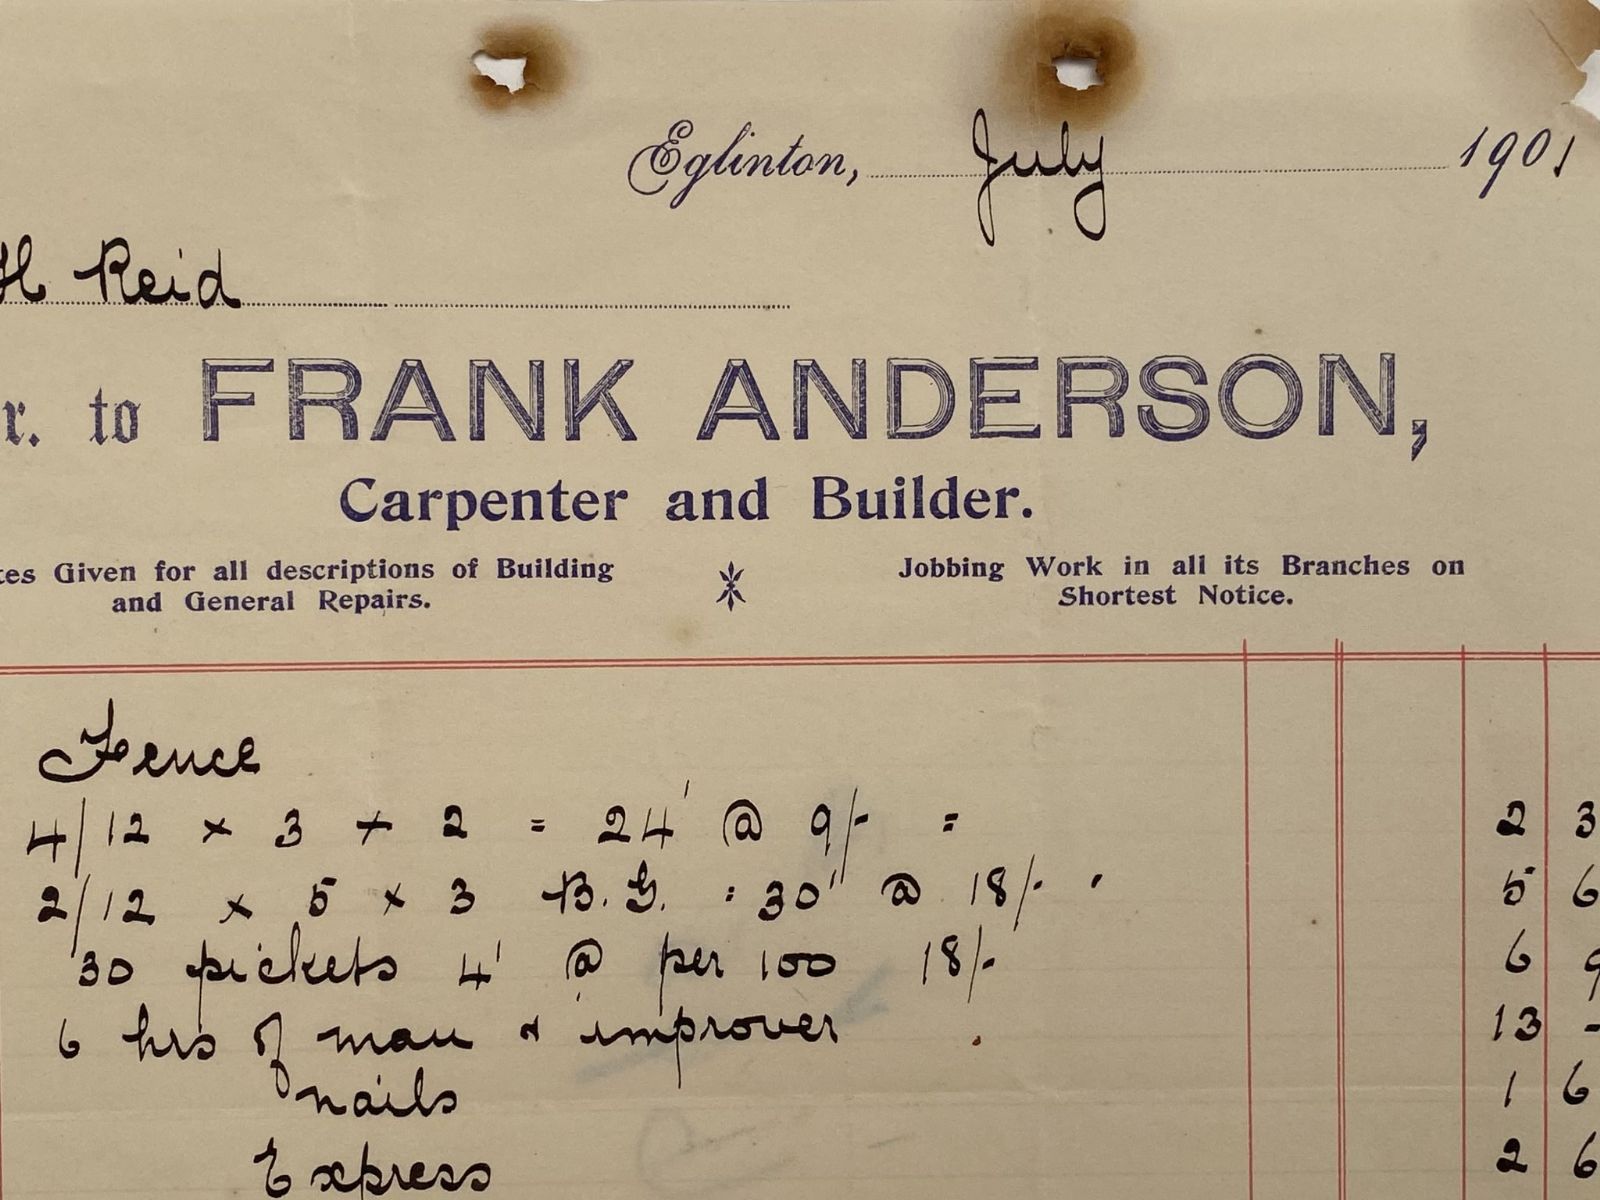 ANTIQUE INVOICE / RECEIPT: Frank Anderson, Eglinton – Carpenter and Builder 1901